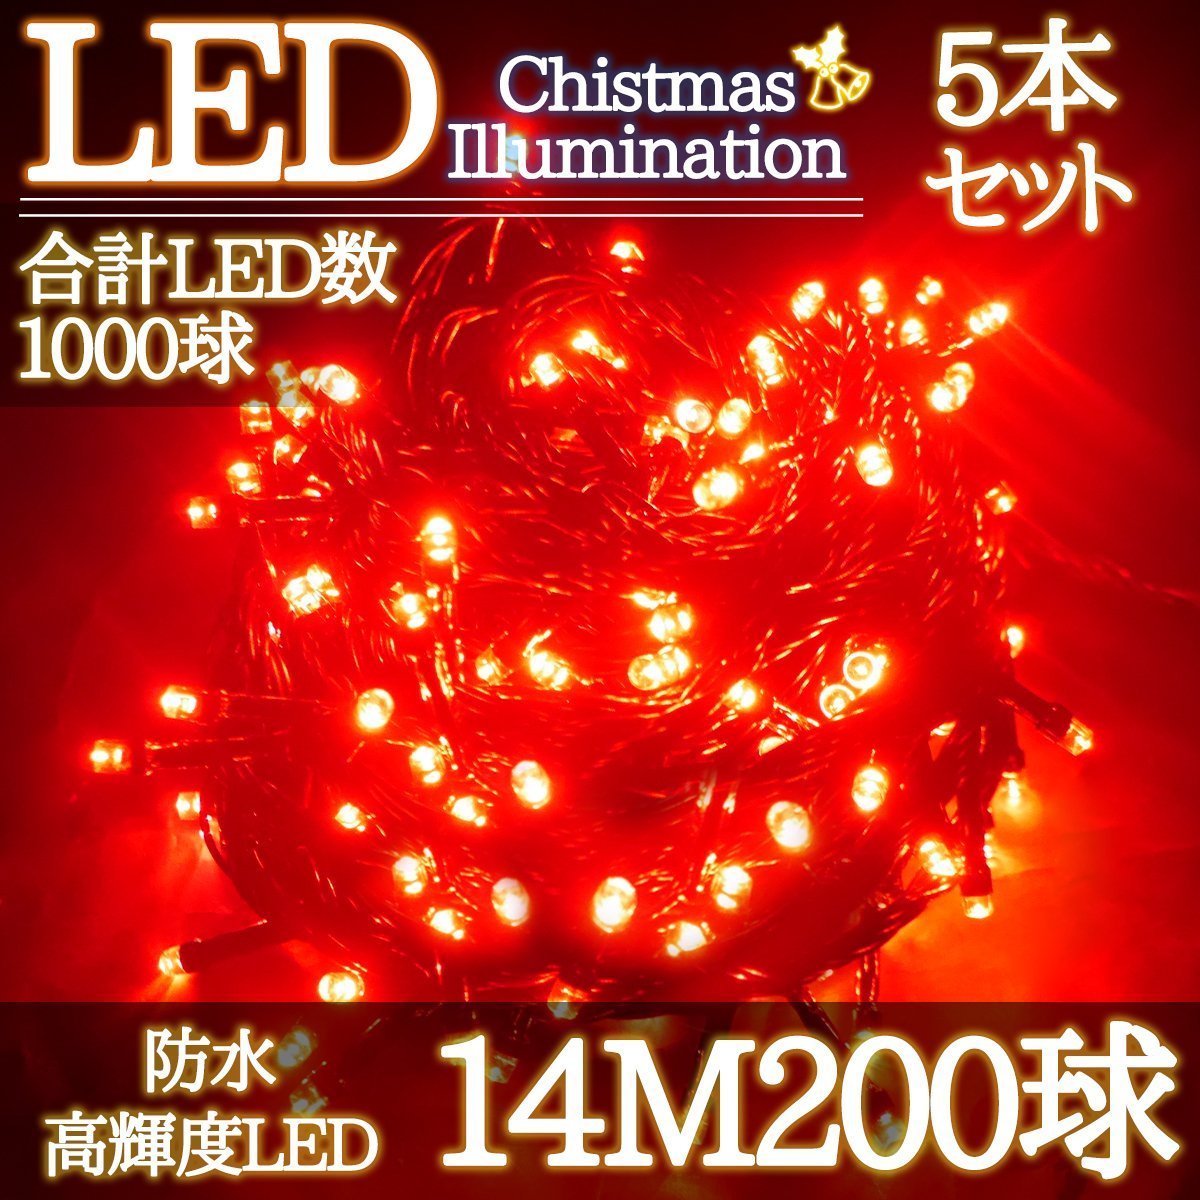 LEDイルミネーション 14M LED200灯 クリスマス つらら ブラックコード 電飾 屋外 ガーデン 庭 防水 連結可能 レッド 5箱同梱 KR-95